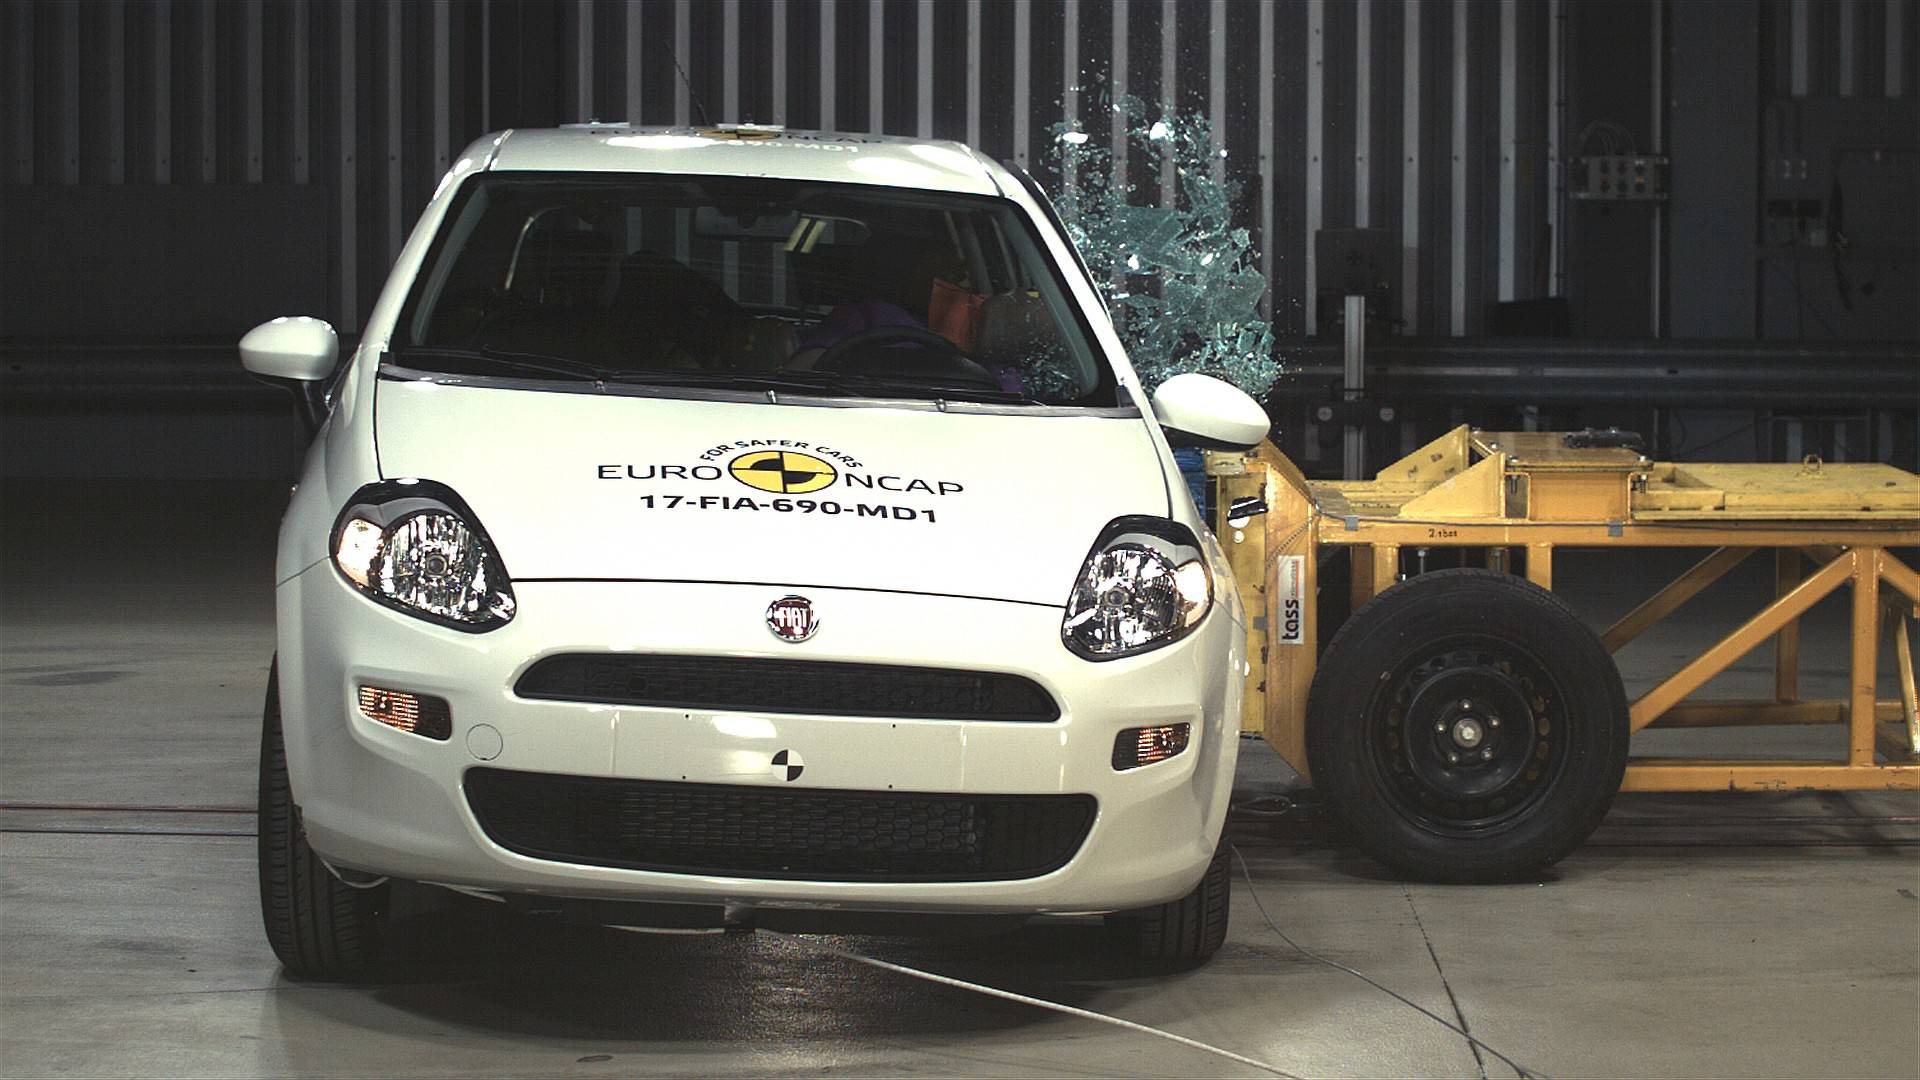 Fiat Punto получи нула звезди за безопасност от Euro NCAP